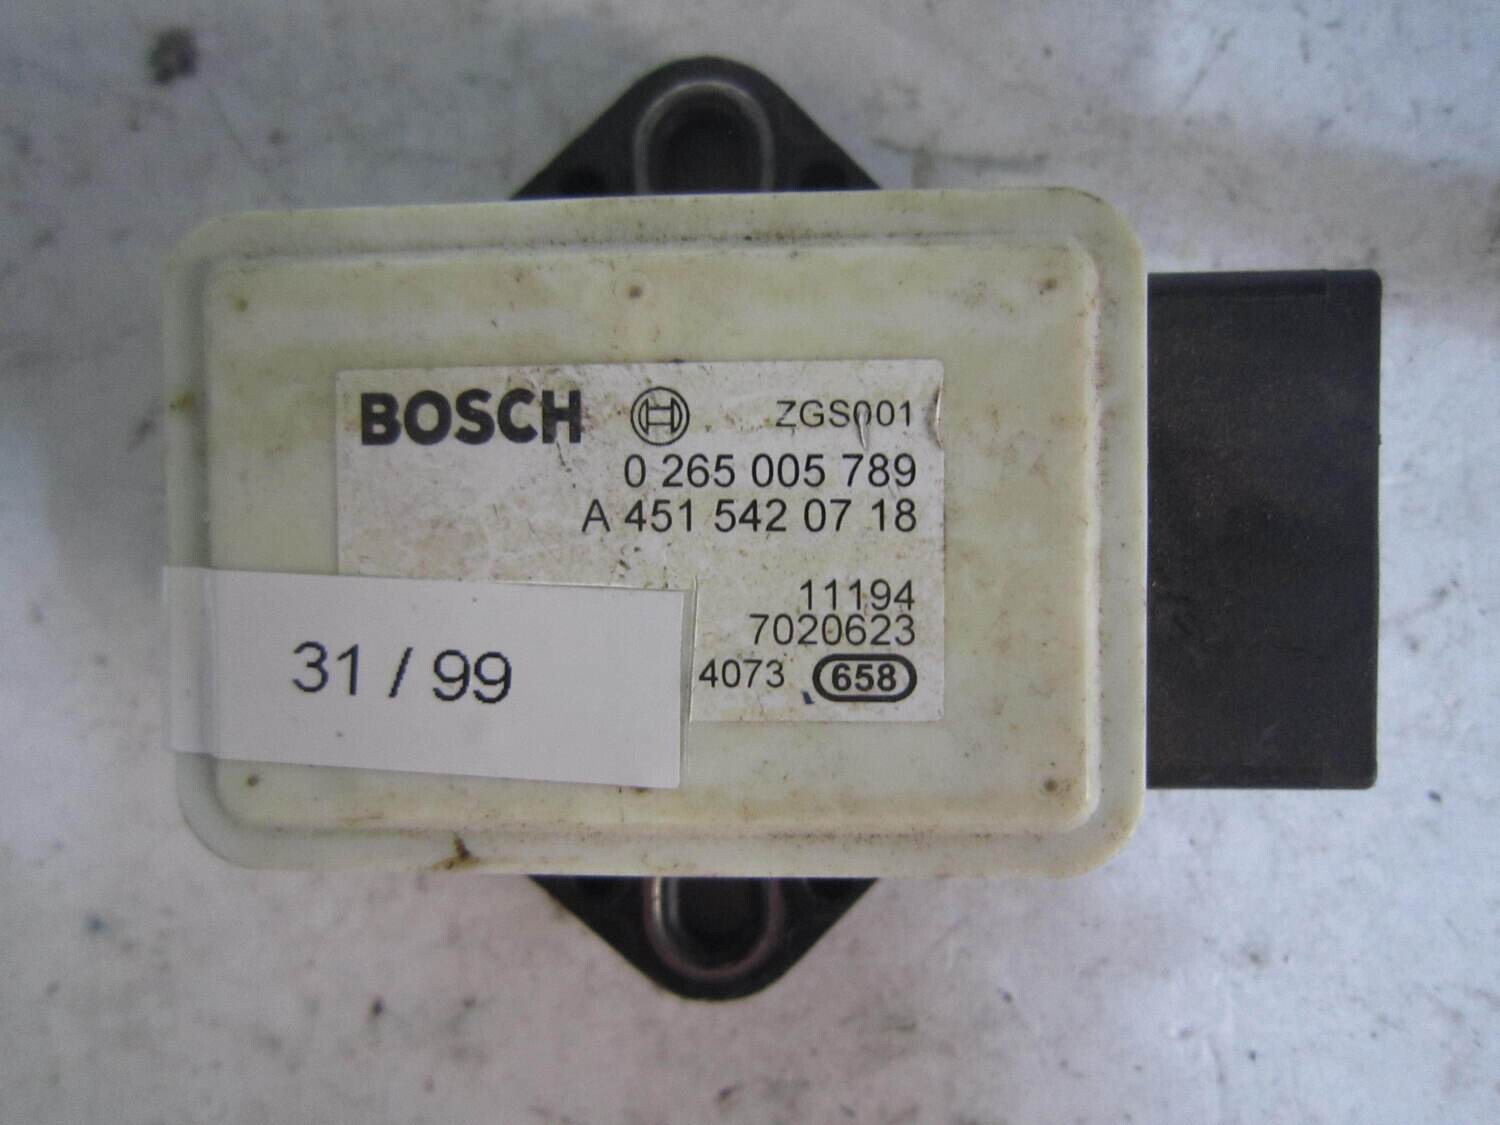 31-99 Sensore Antimbardata Bosch 0 265 005 789 0265005789 A 451 542 07 18 A4515420718 SMART Generica FORTWO 451